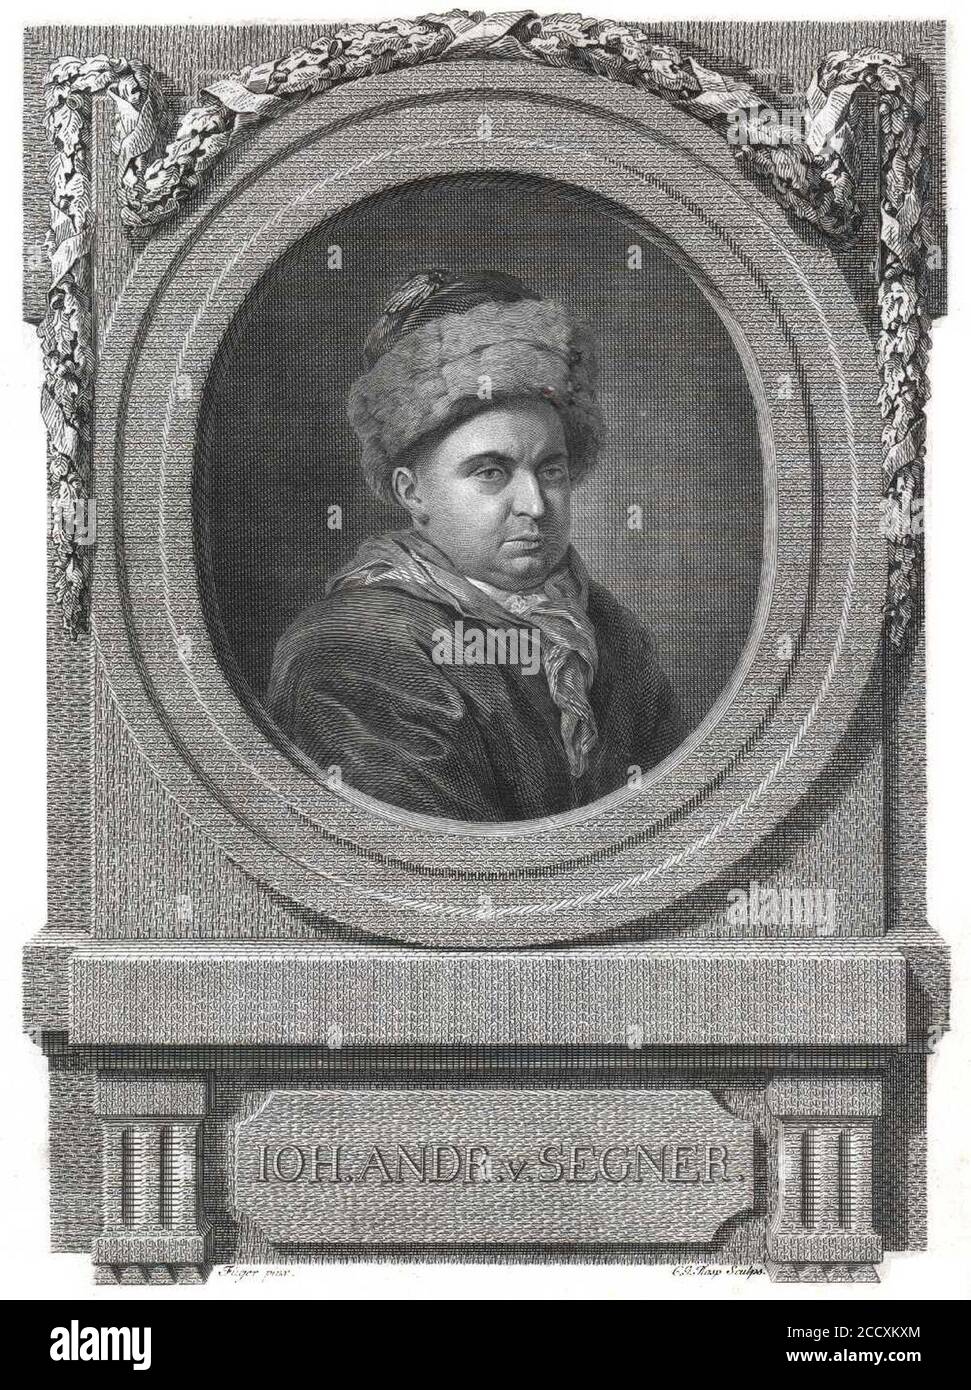 Johann Andreas von Segner. Stock Photo